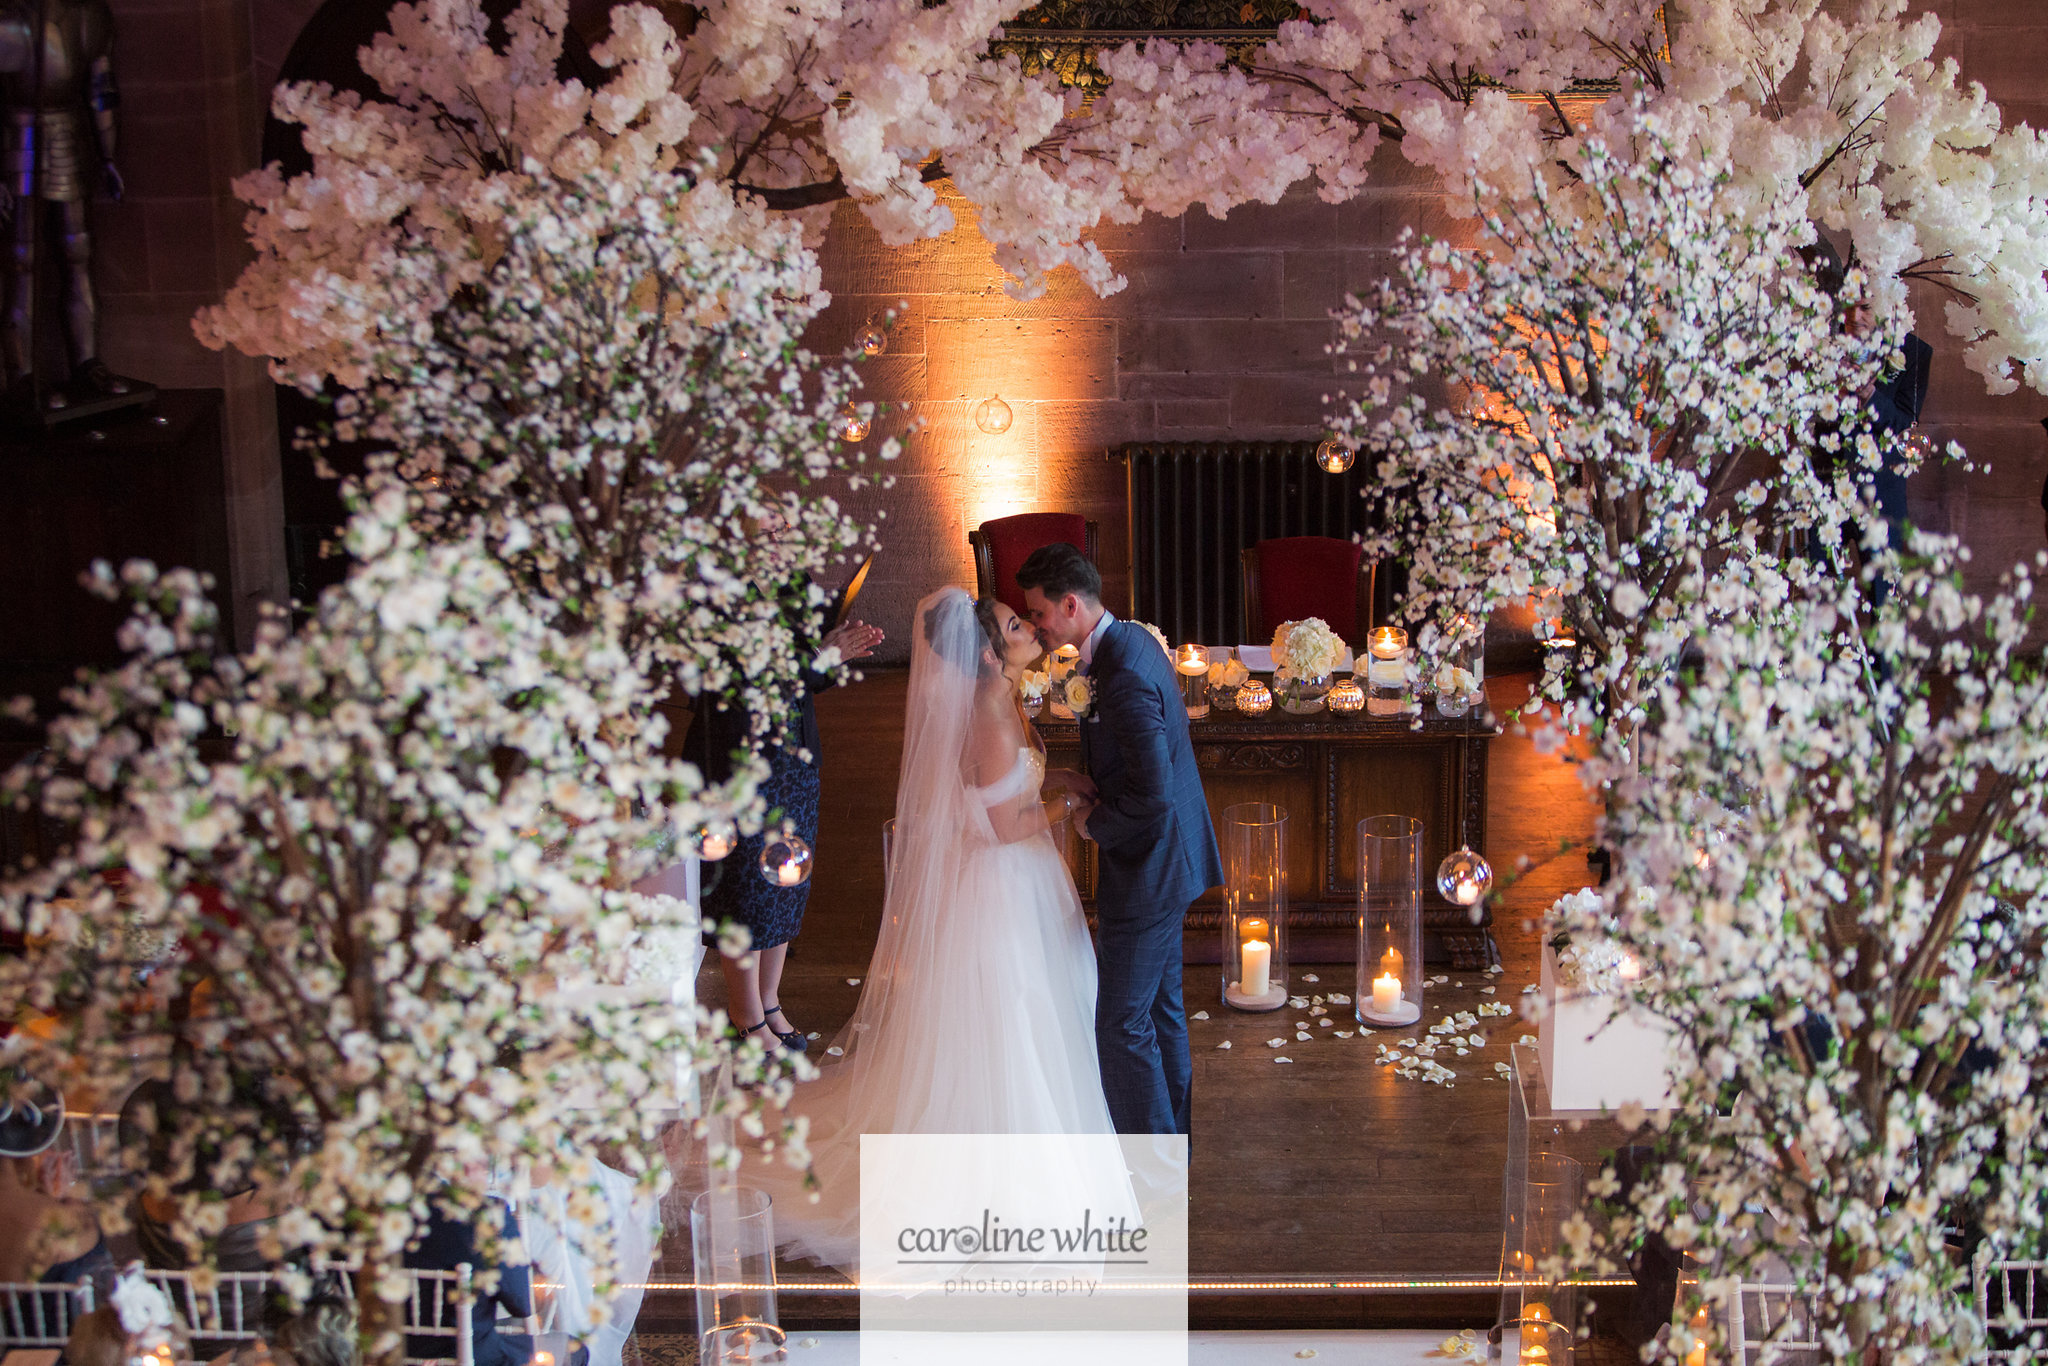 Wedding Flowers Cheshire: Banner Image